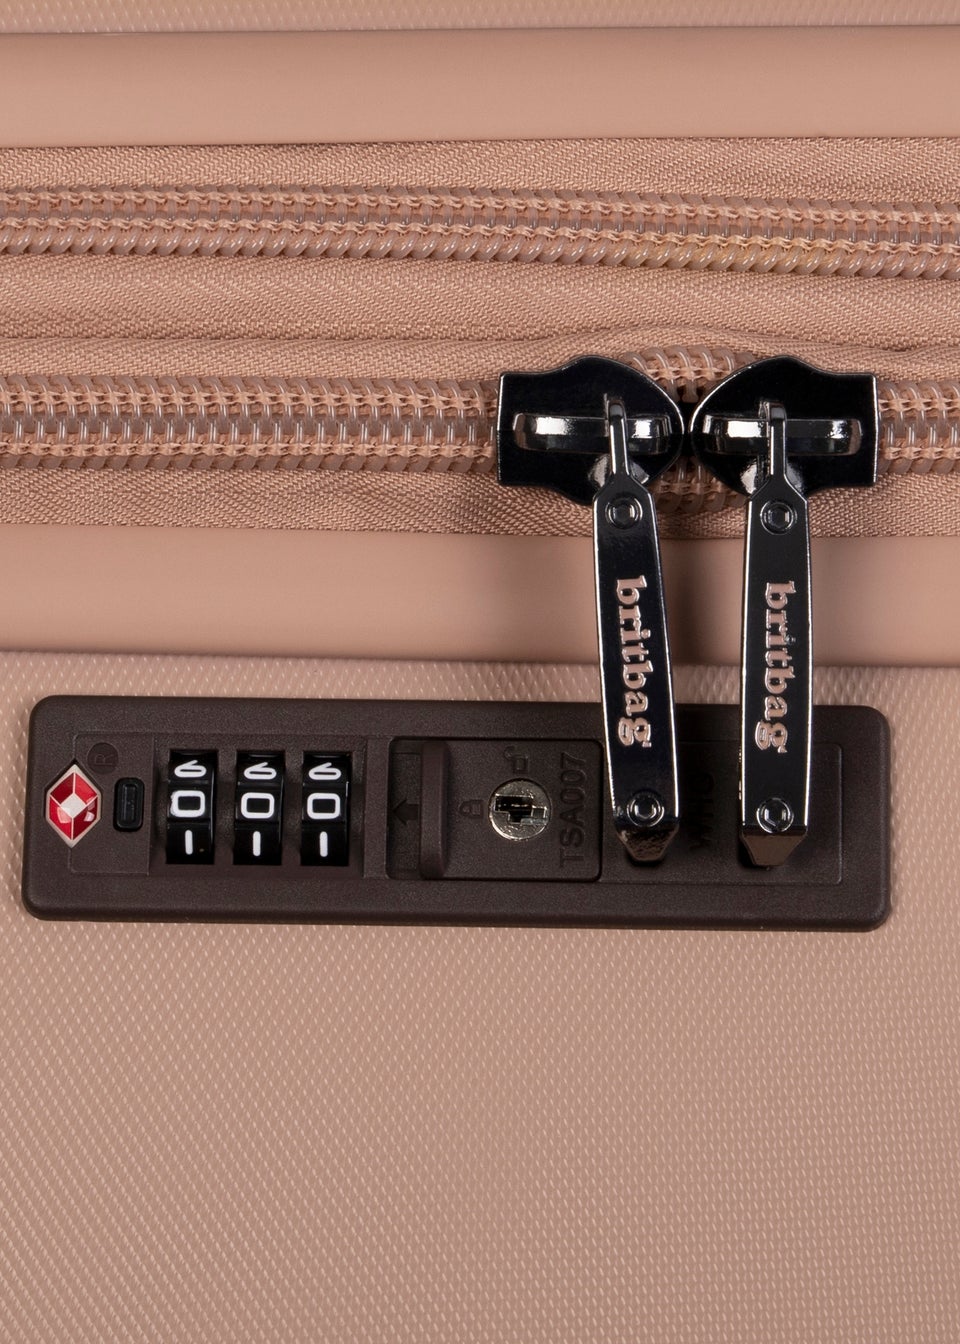 BritBag Galloway Evening Pink Suitcase with TSA Lock